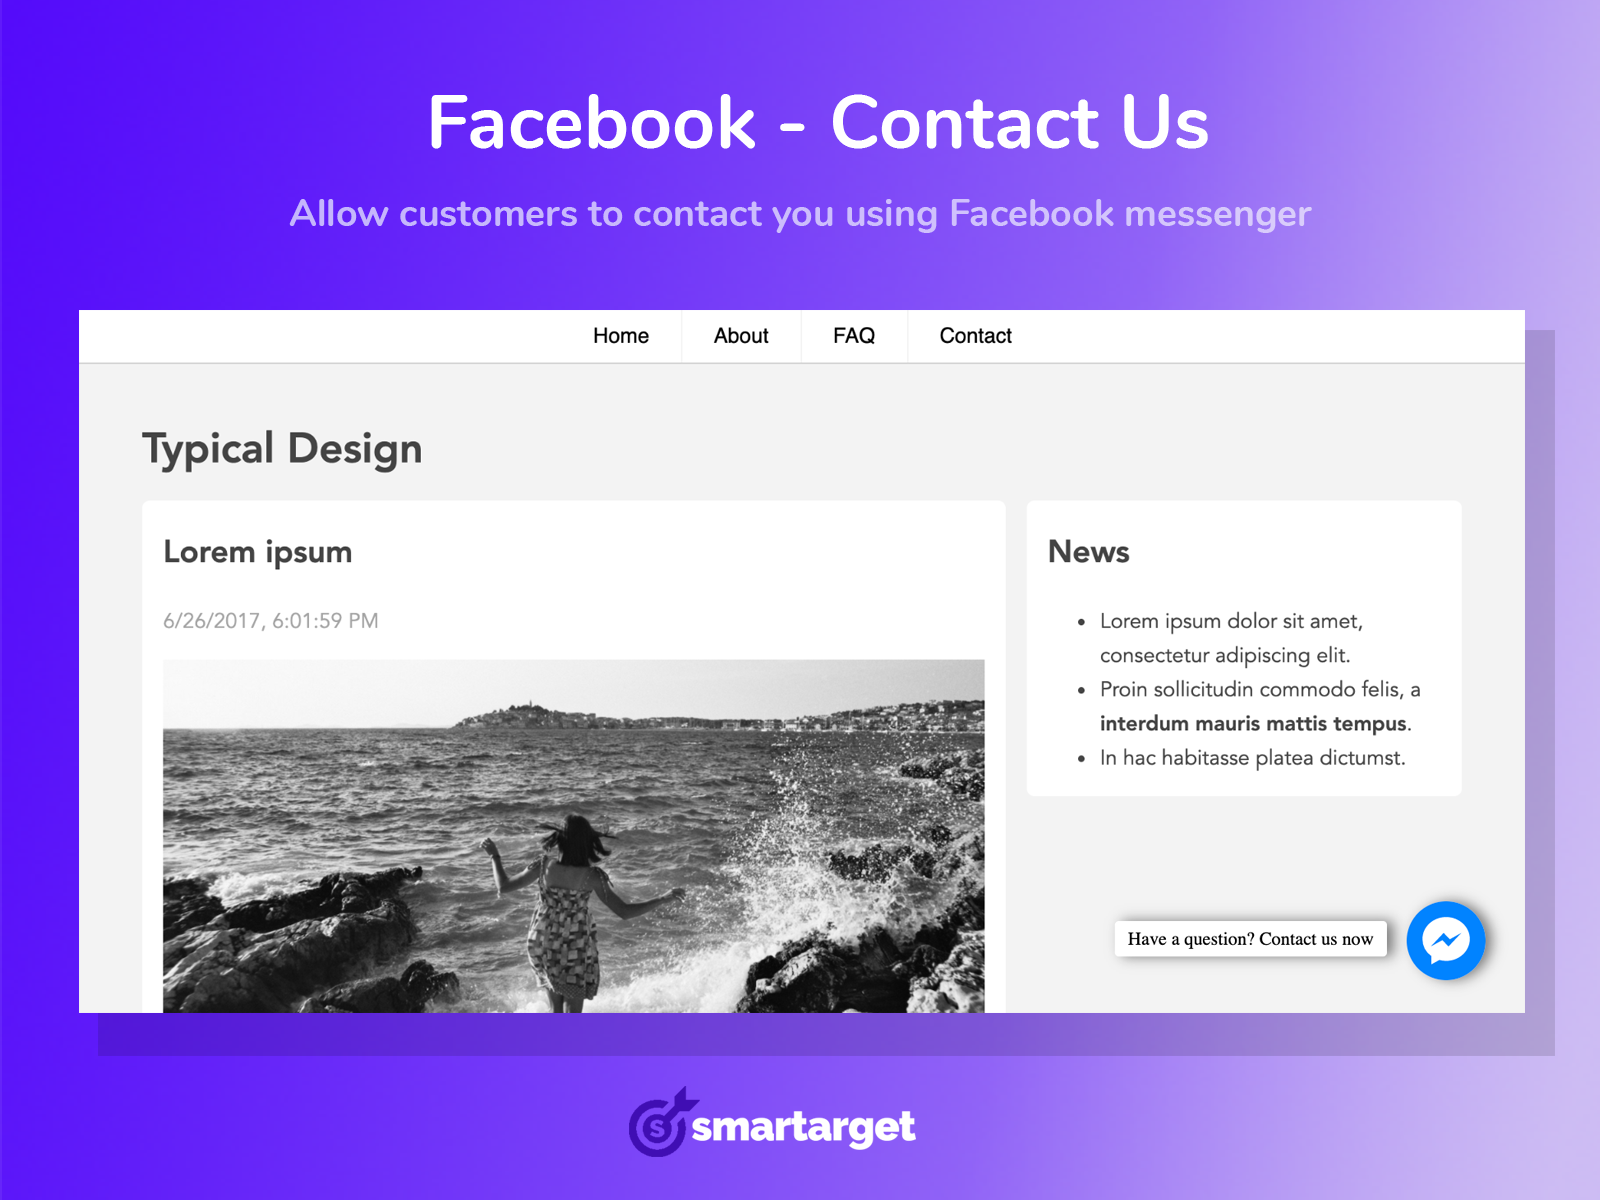 Smartarget Facebook Messenger - Contact Us Image